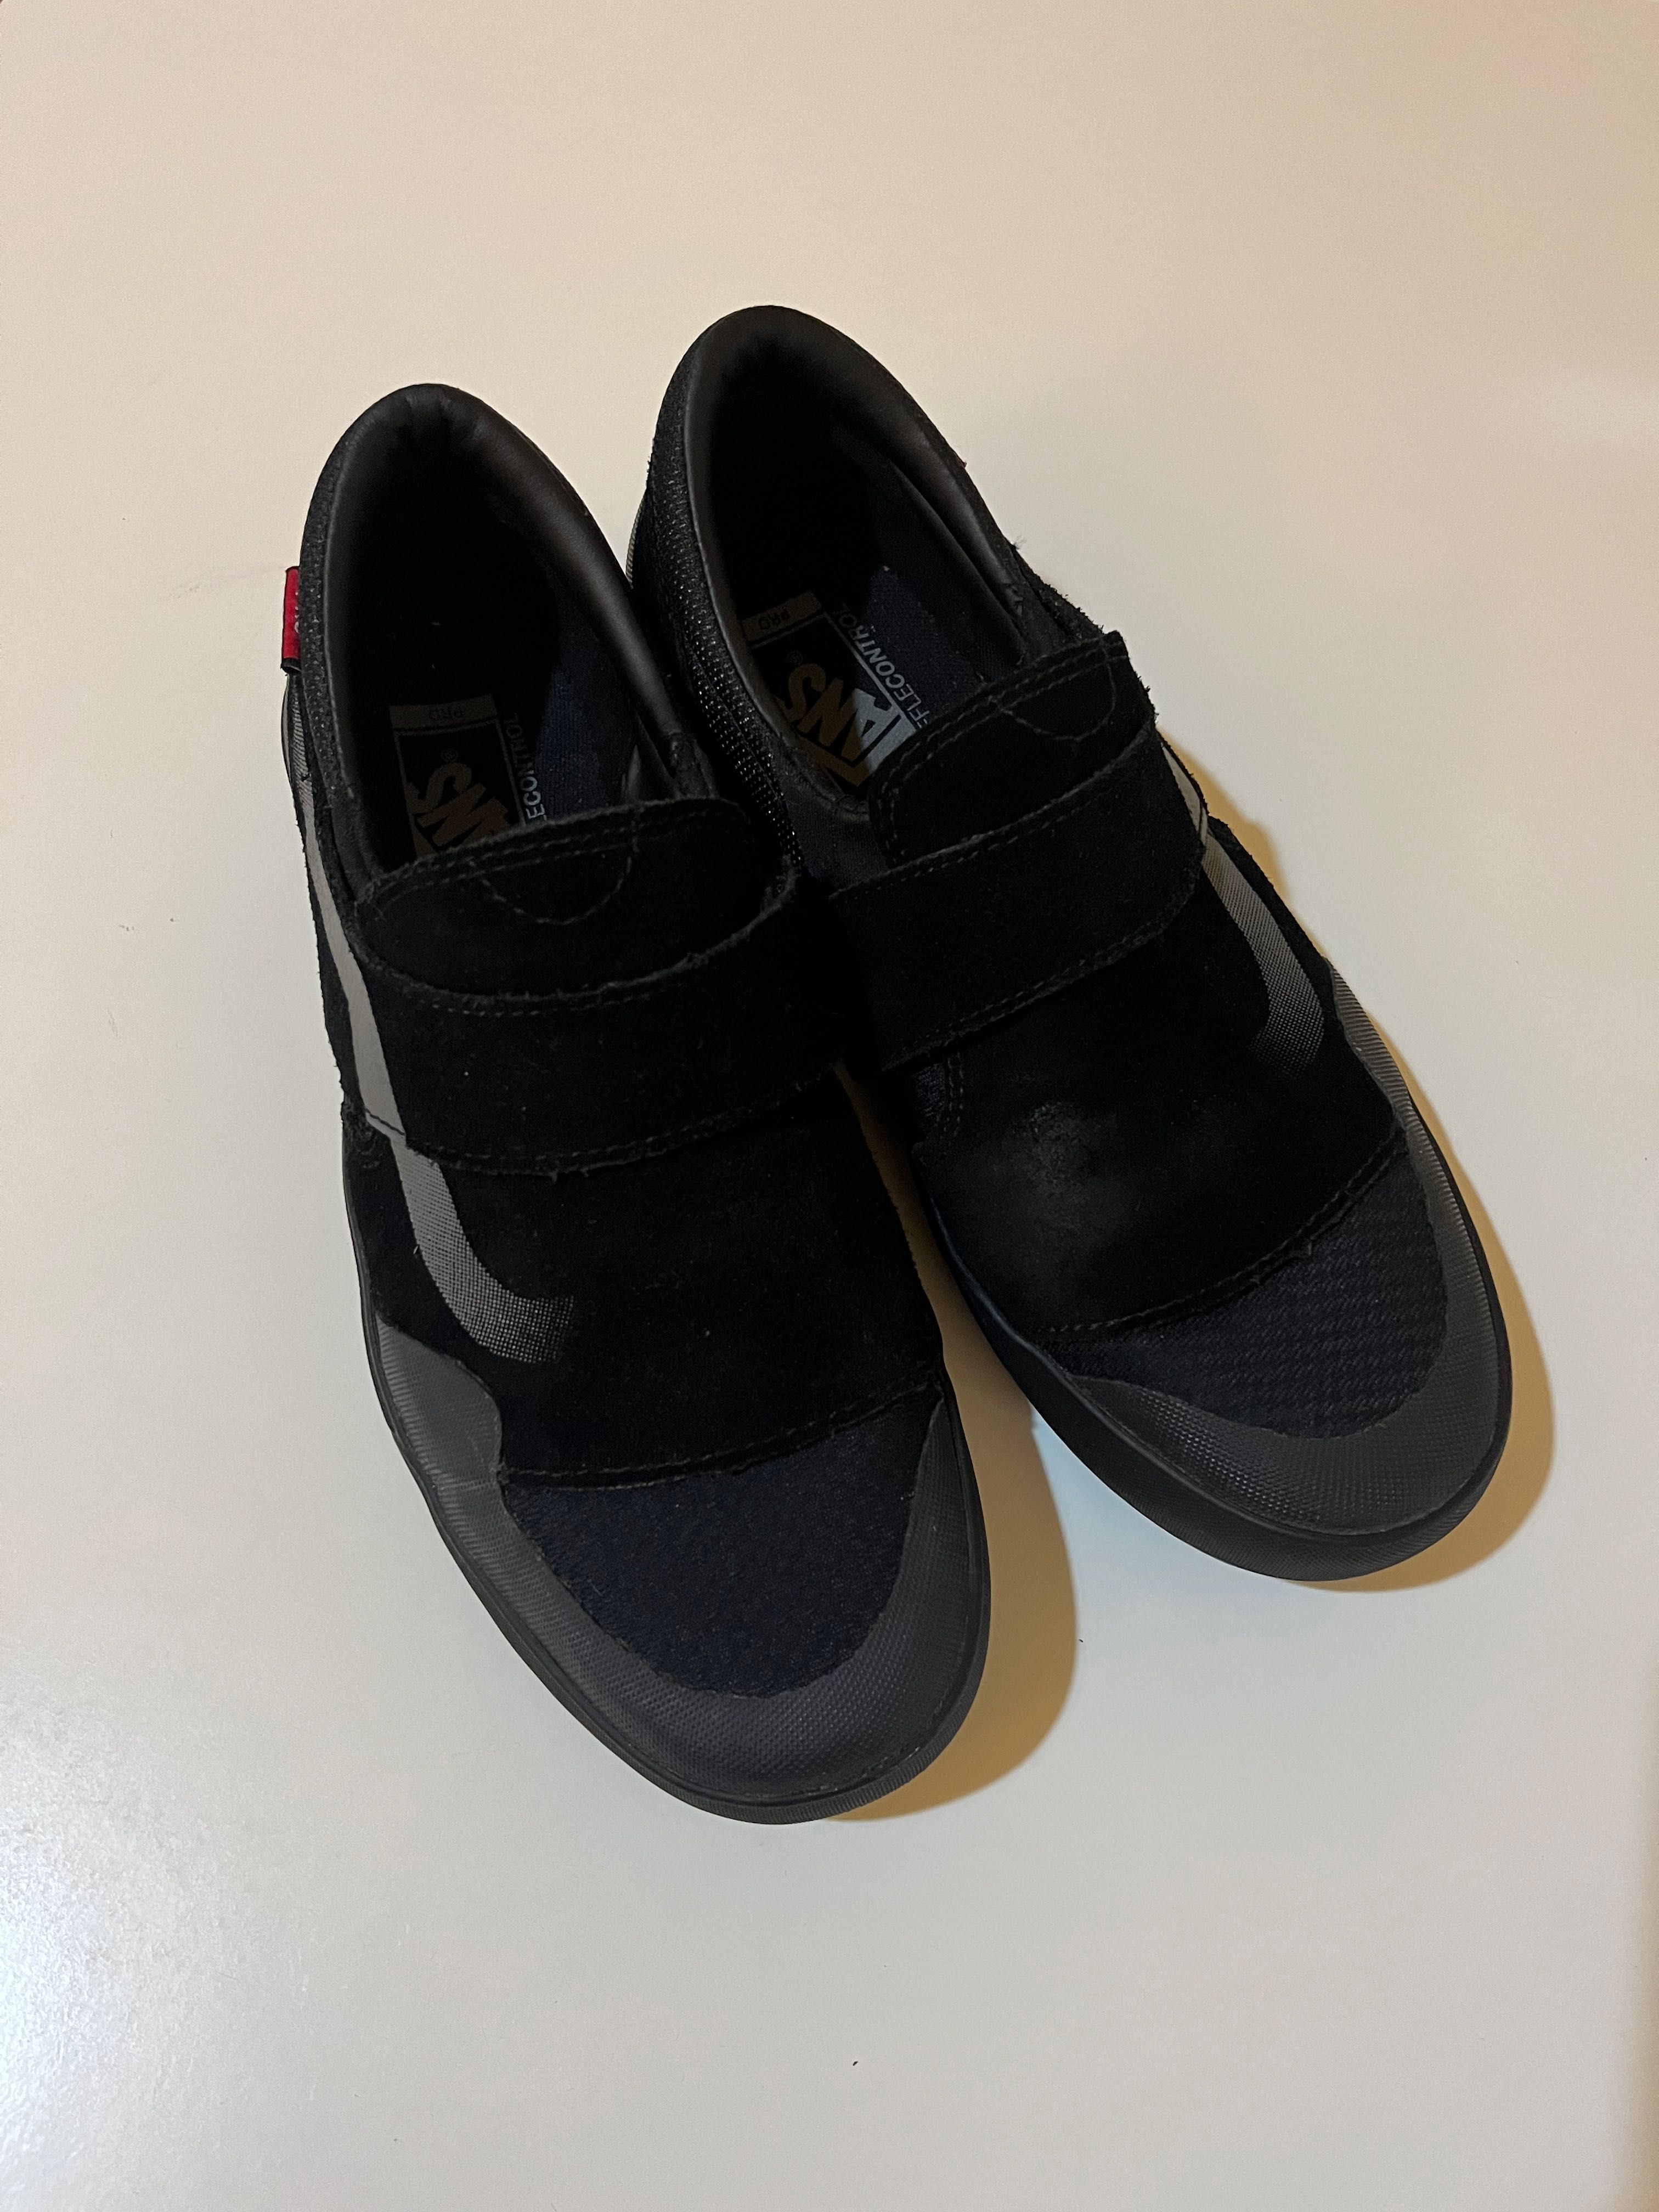 Vans Pro sneakers black suede